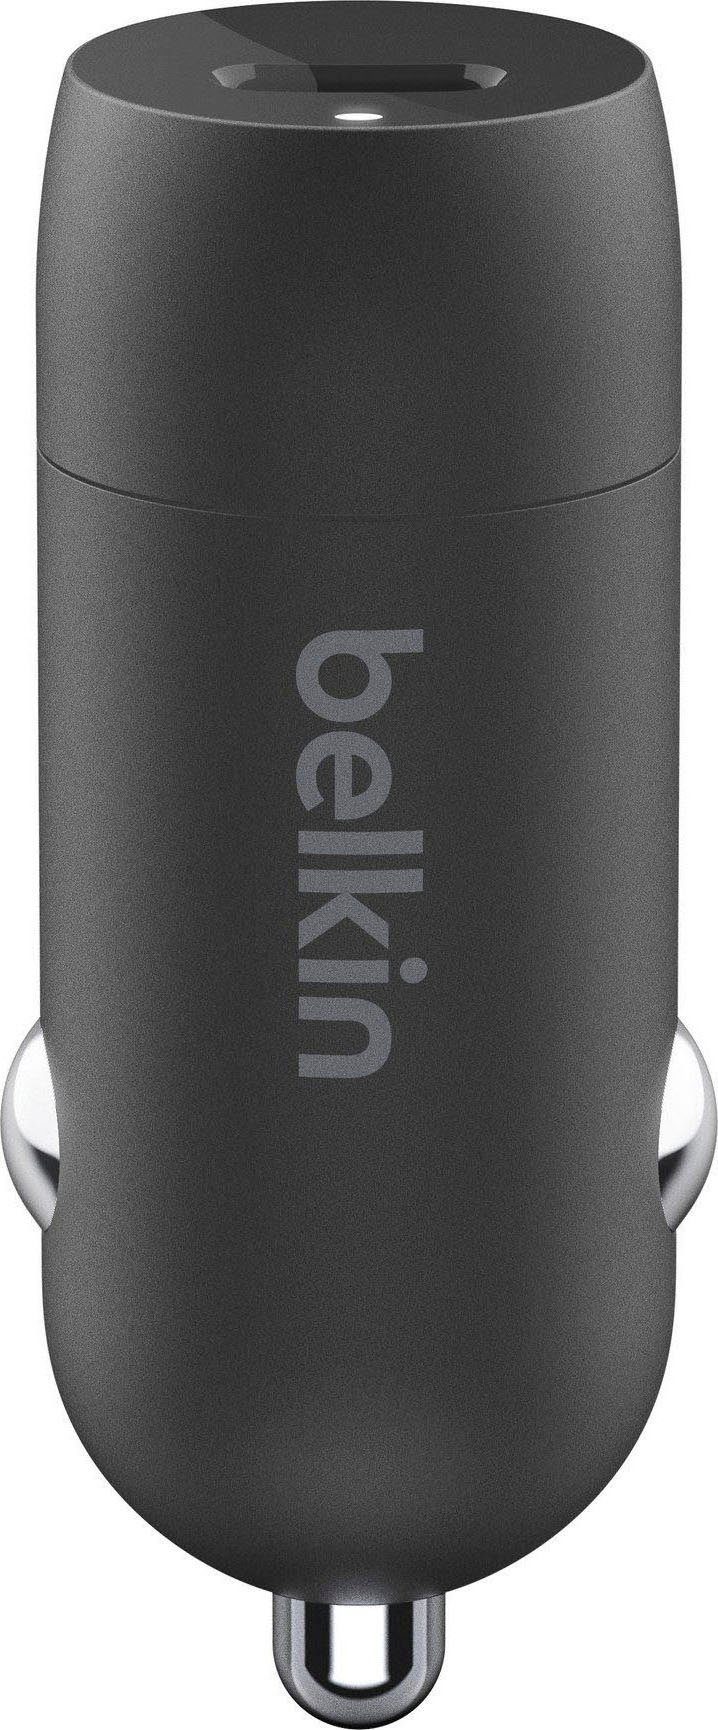 USB-C Power mit Belkin 20W Autobatterie-Ladegerät Delivery Kfz-Ladegerät